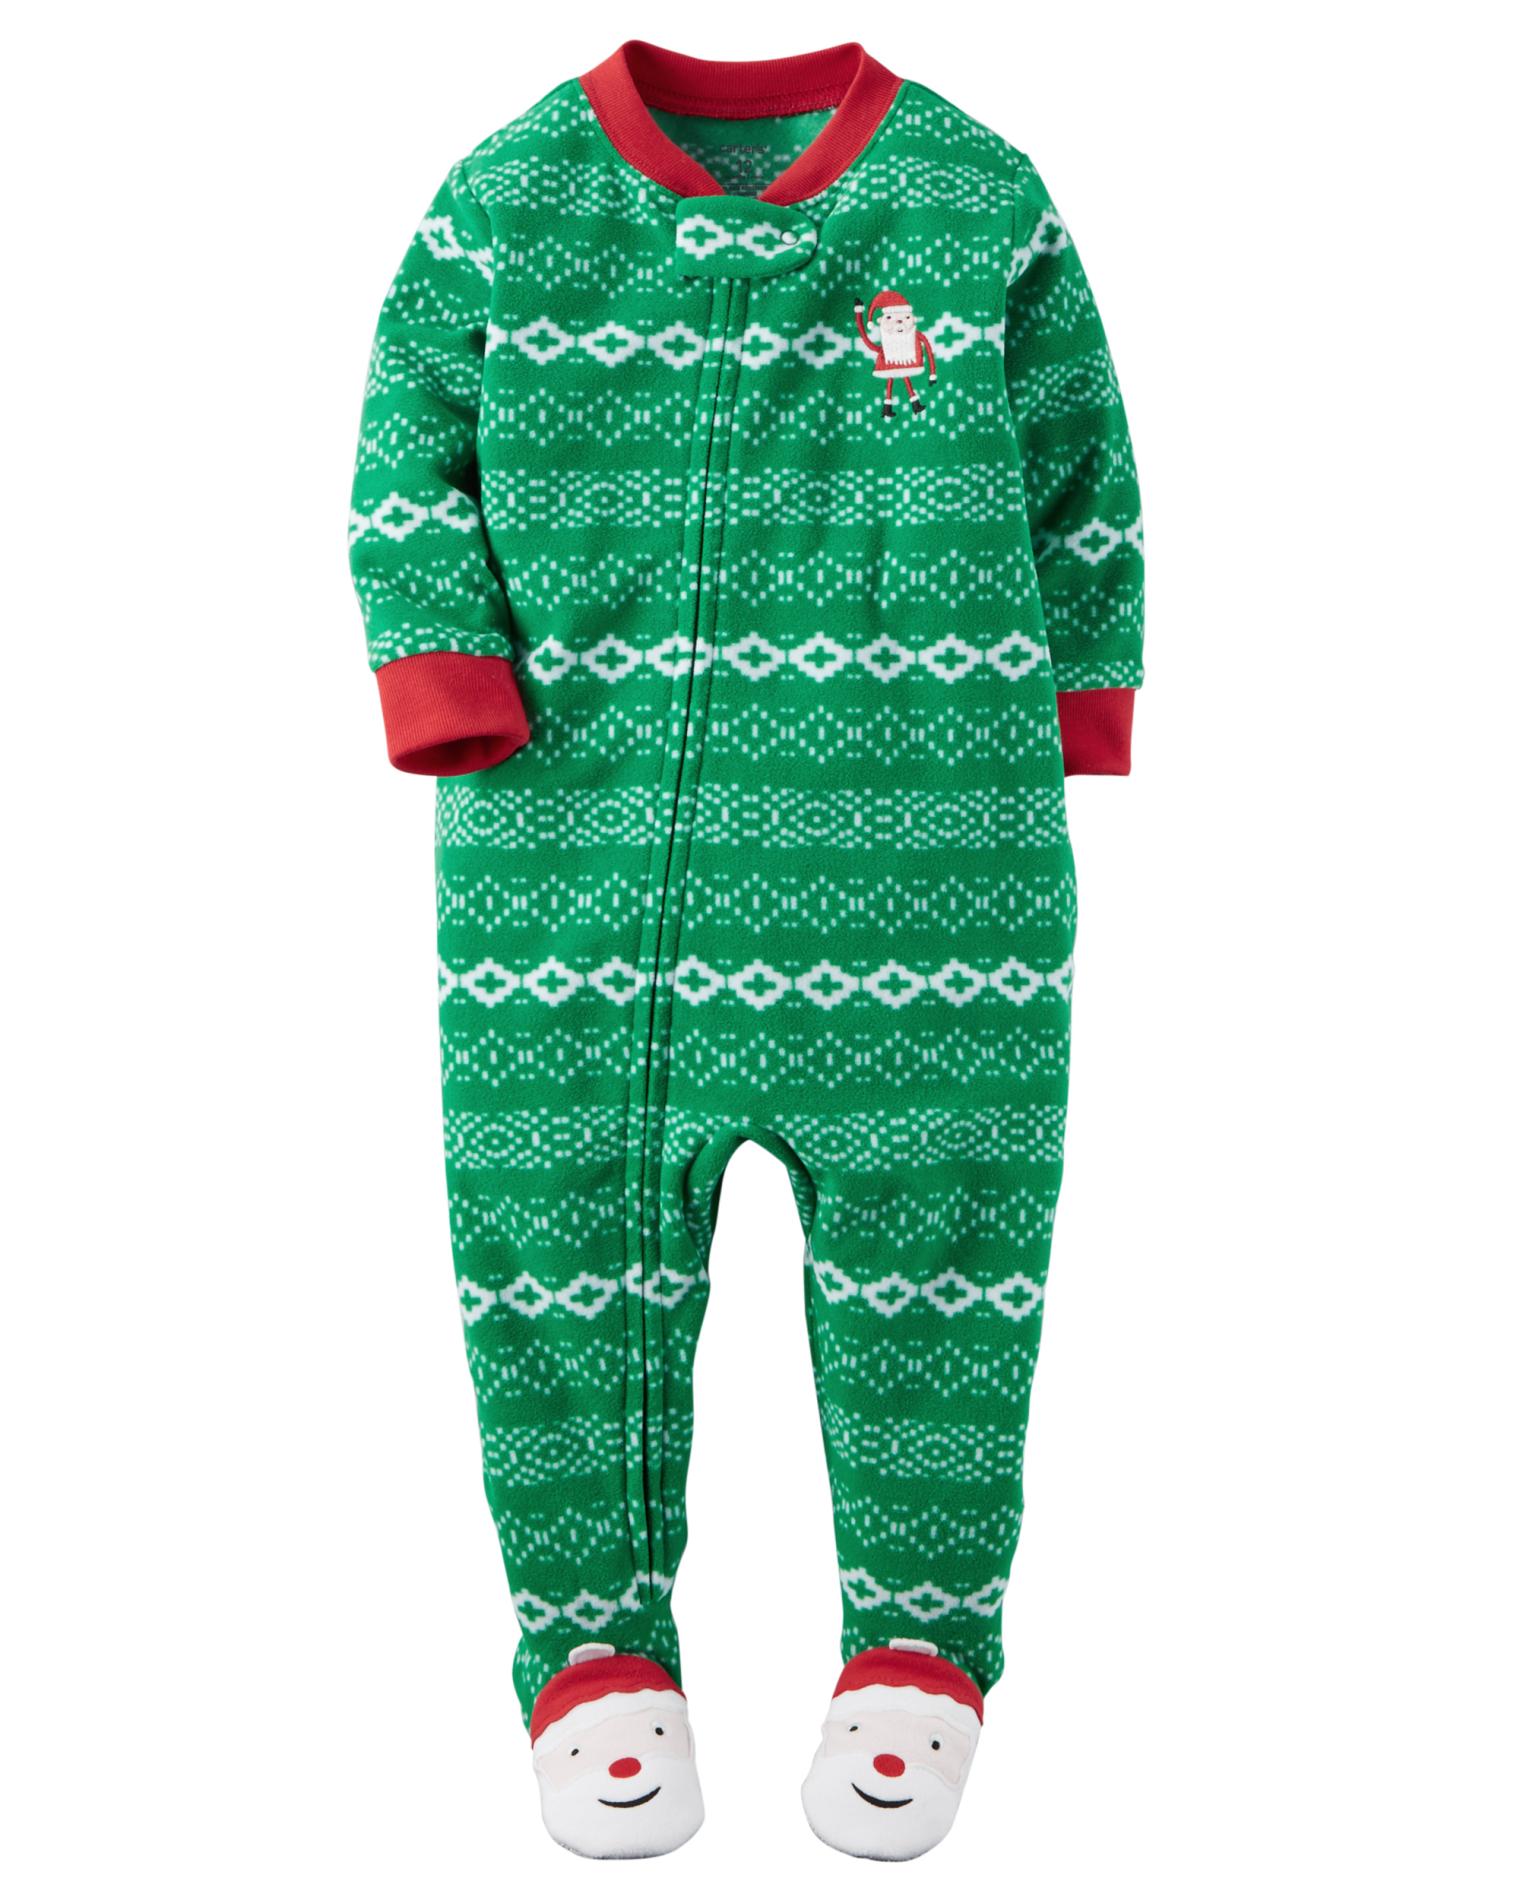 Carter's Infant & Toddler Boys' Fleece Christmas Sleeper Pajamas - Striped